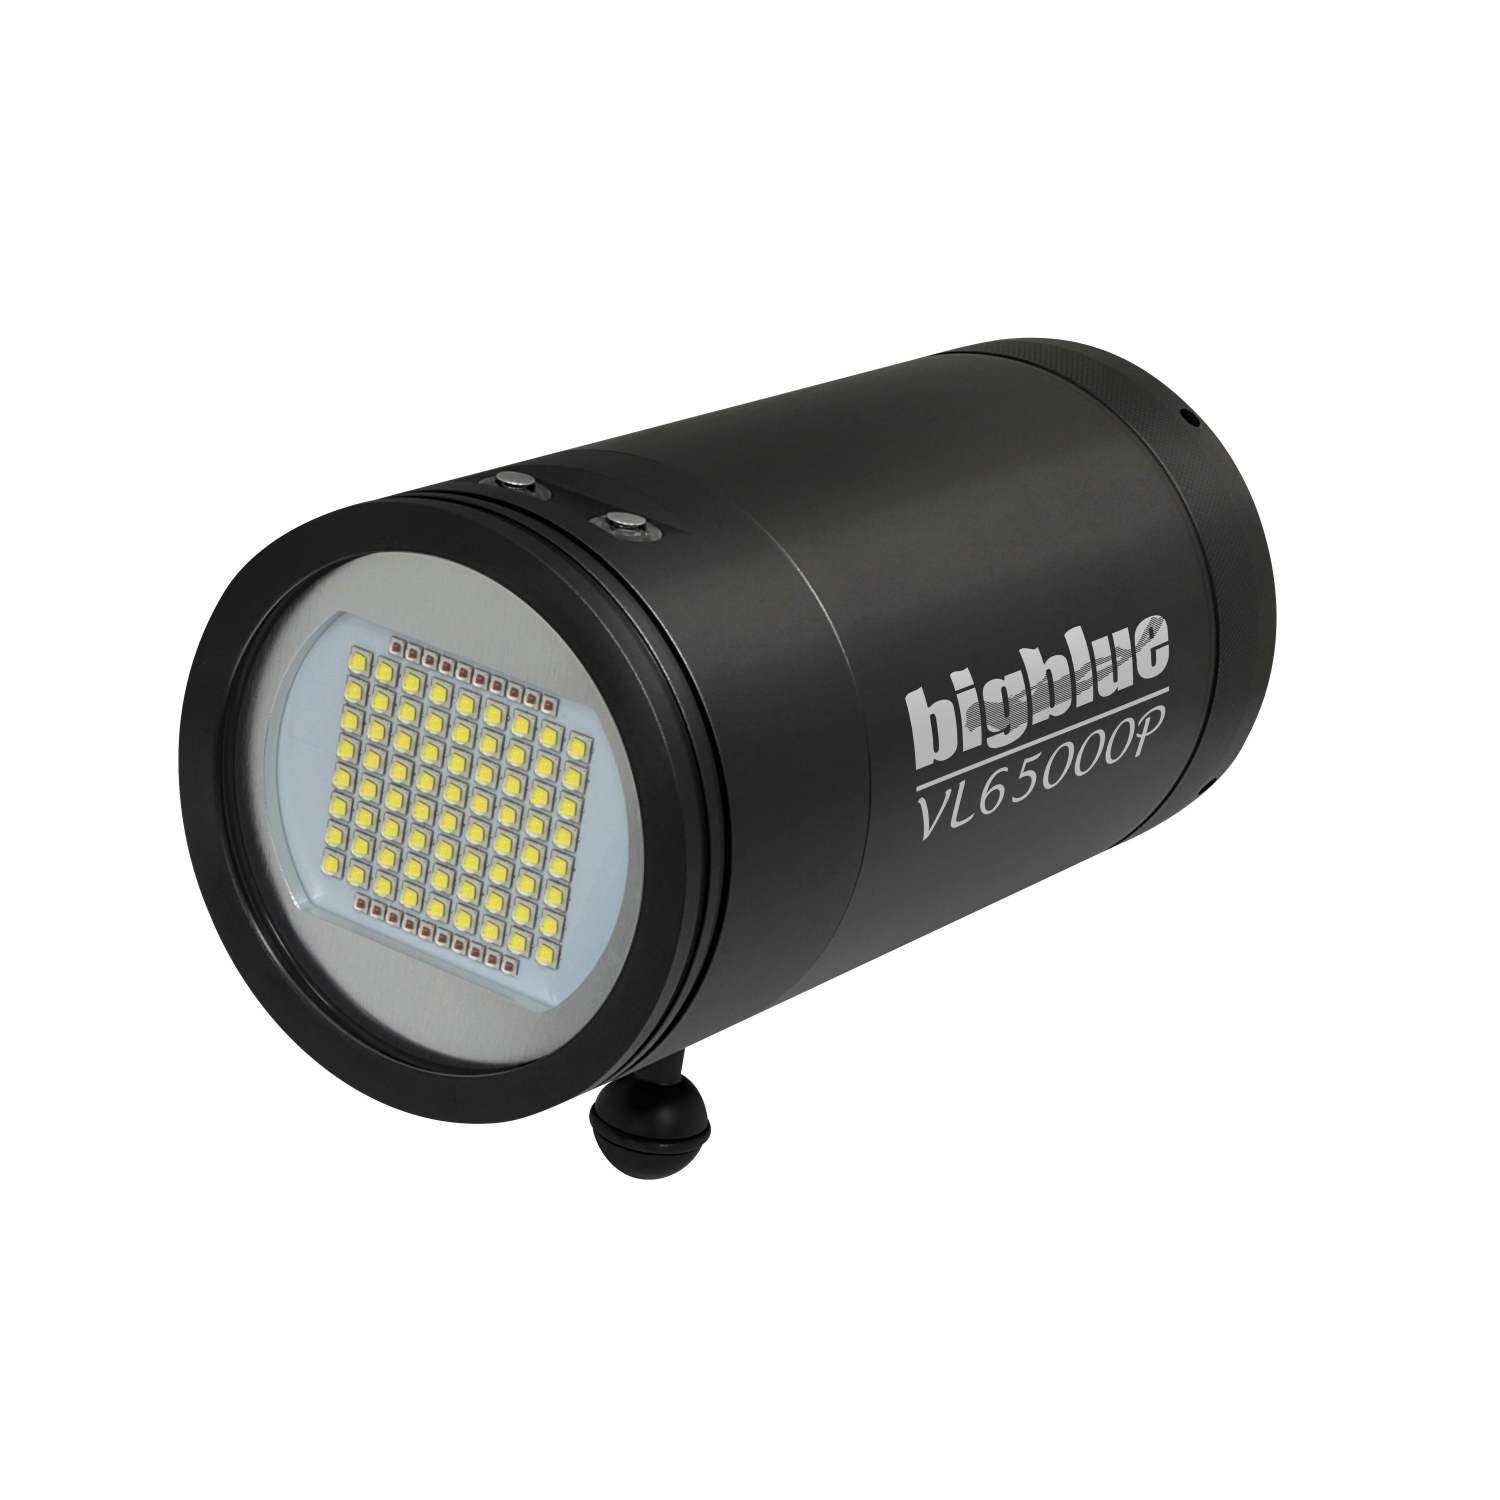 Bigblue 65,000-Lumen Pro Video Light